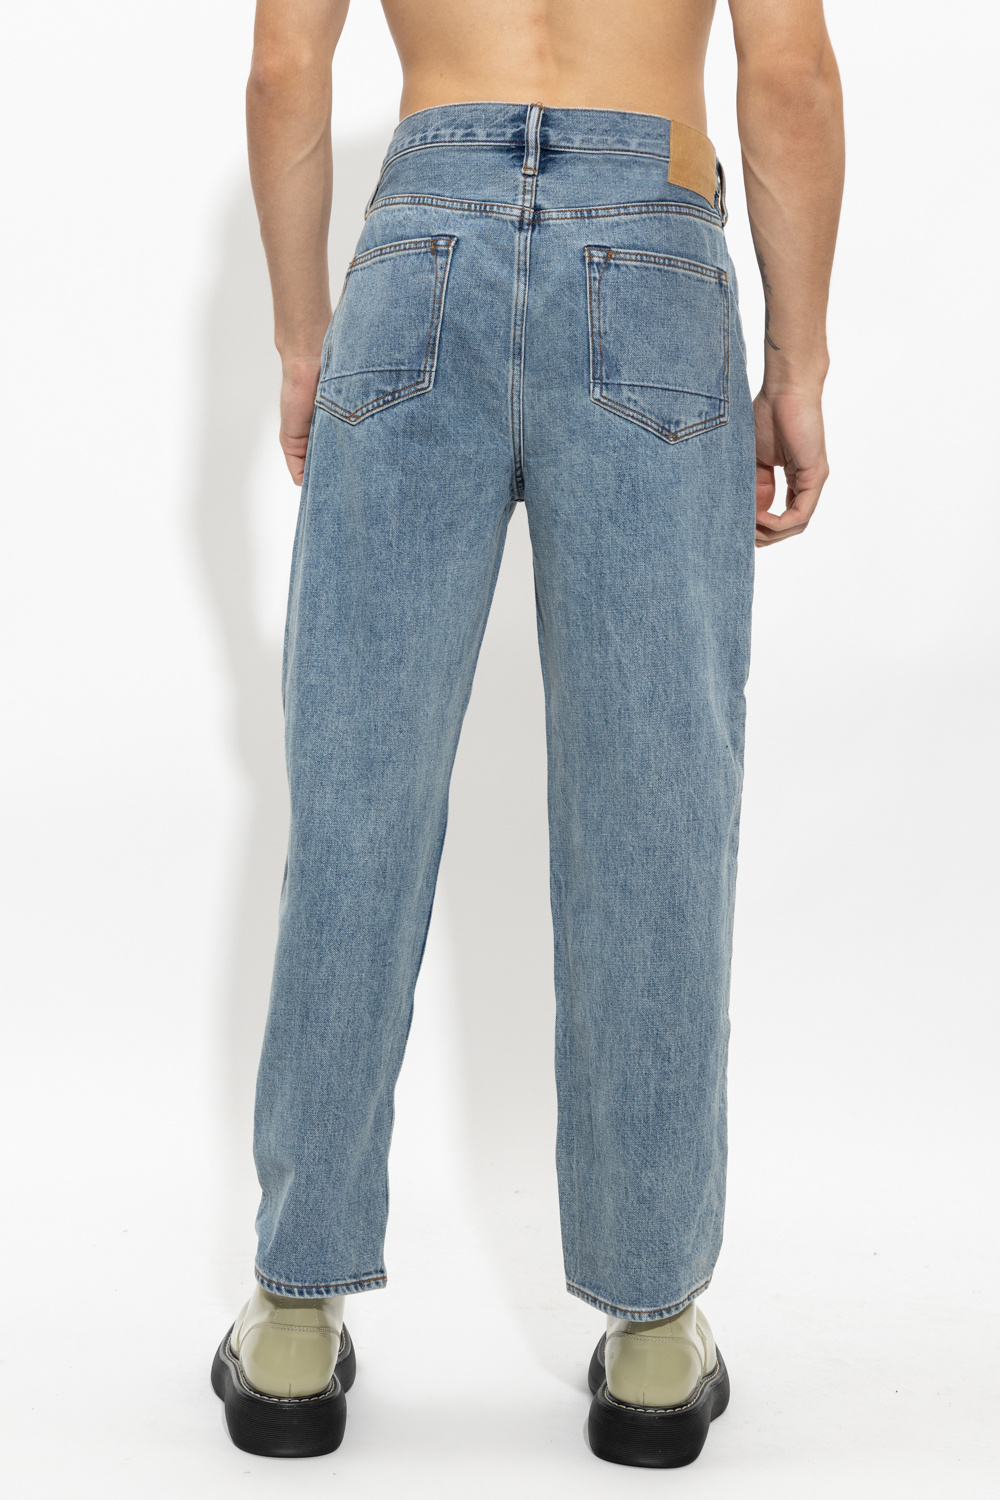 AllSaints 'Reeves' jeans | Men's Clothing | Vitkac